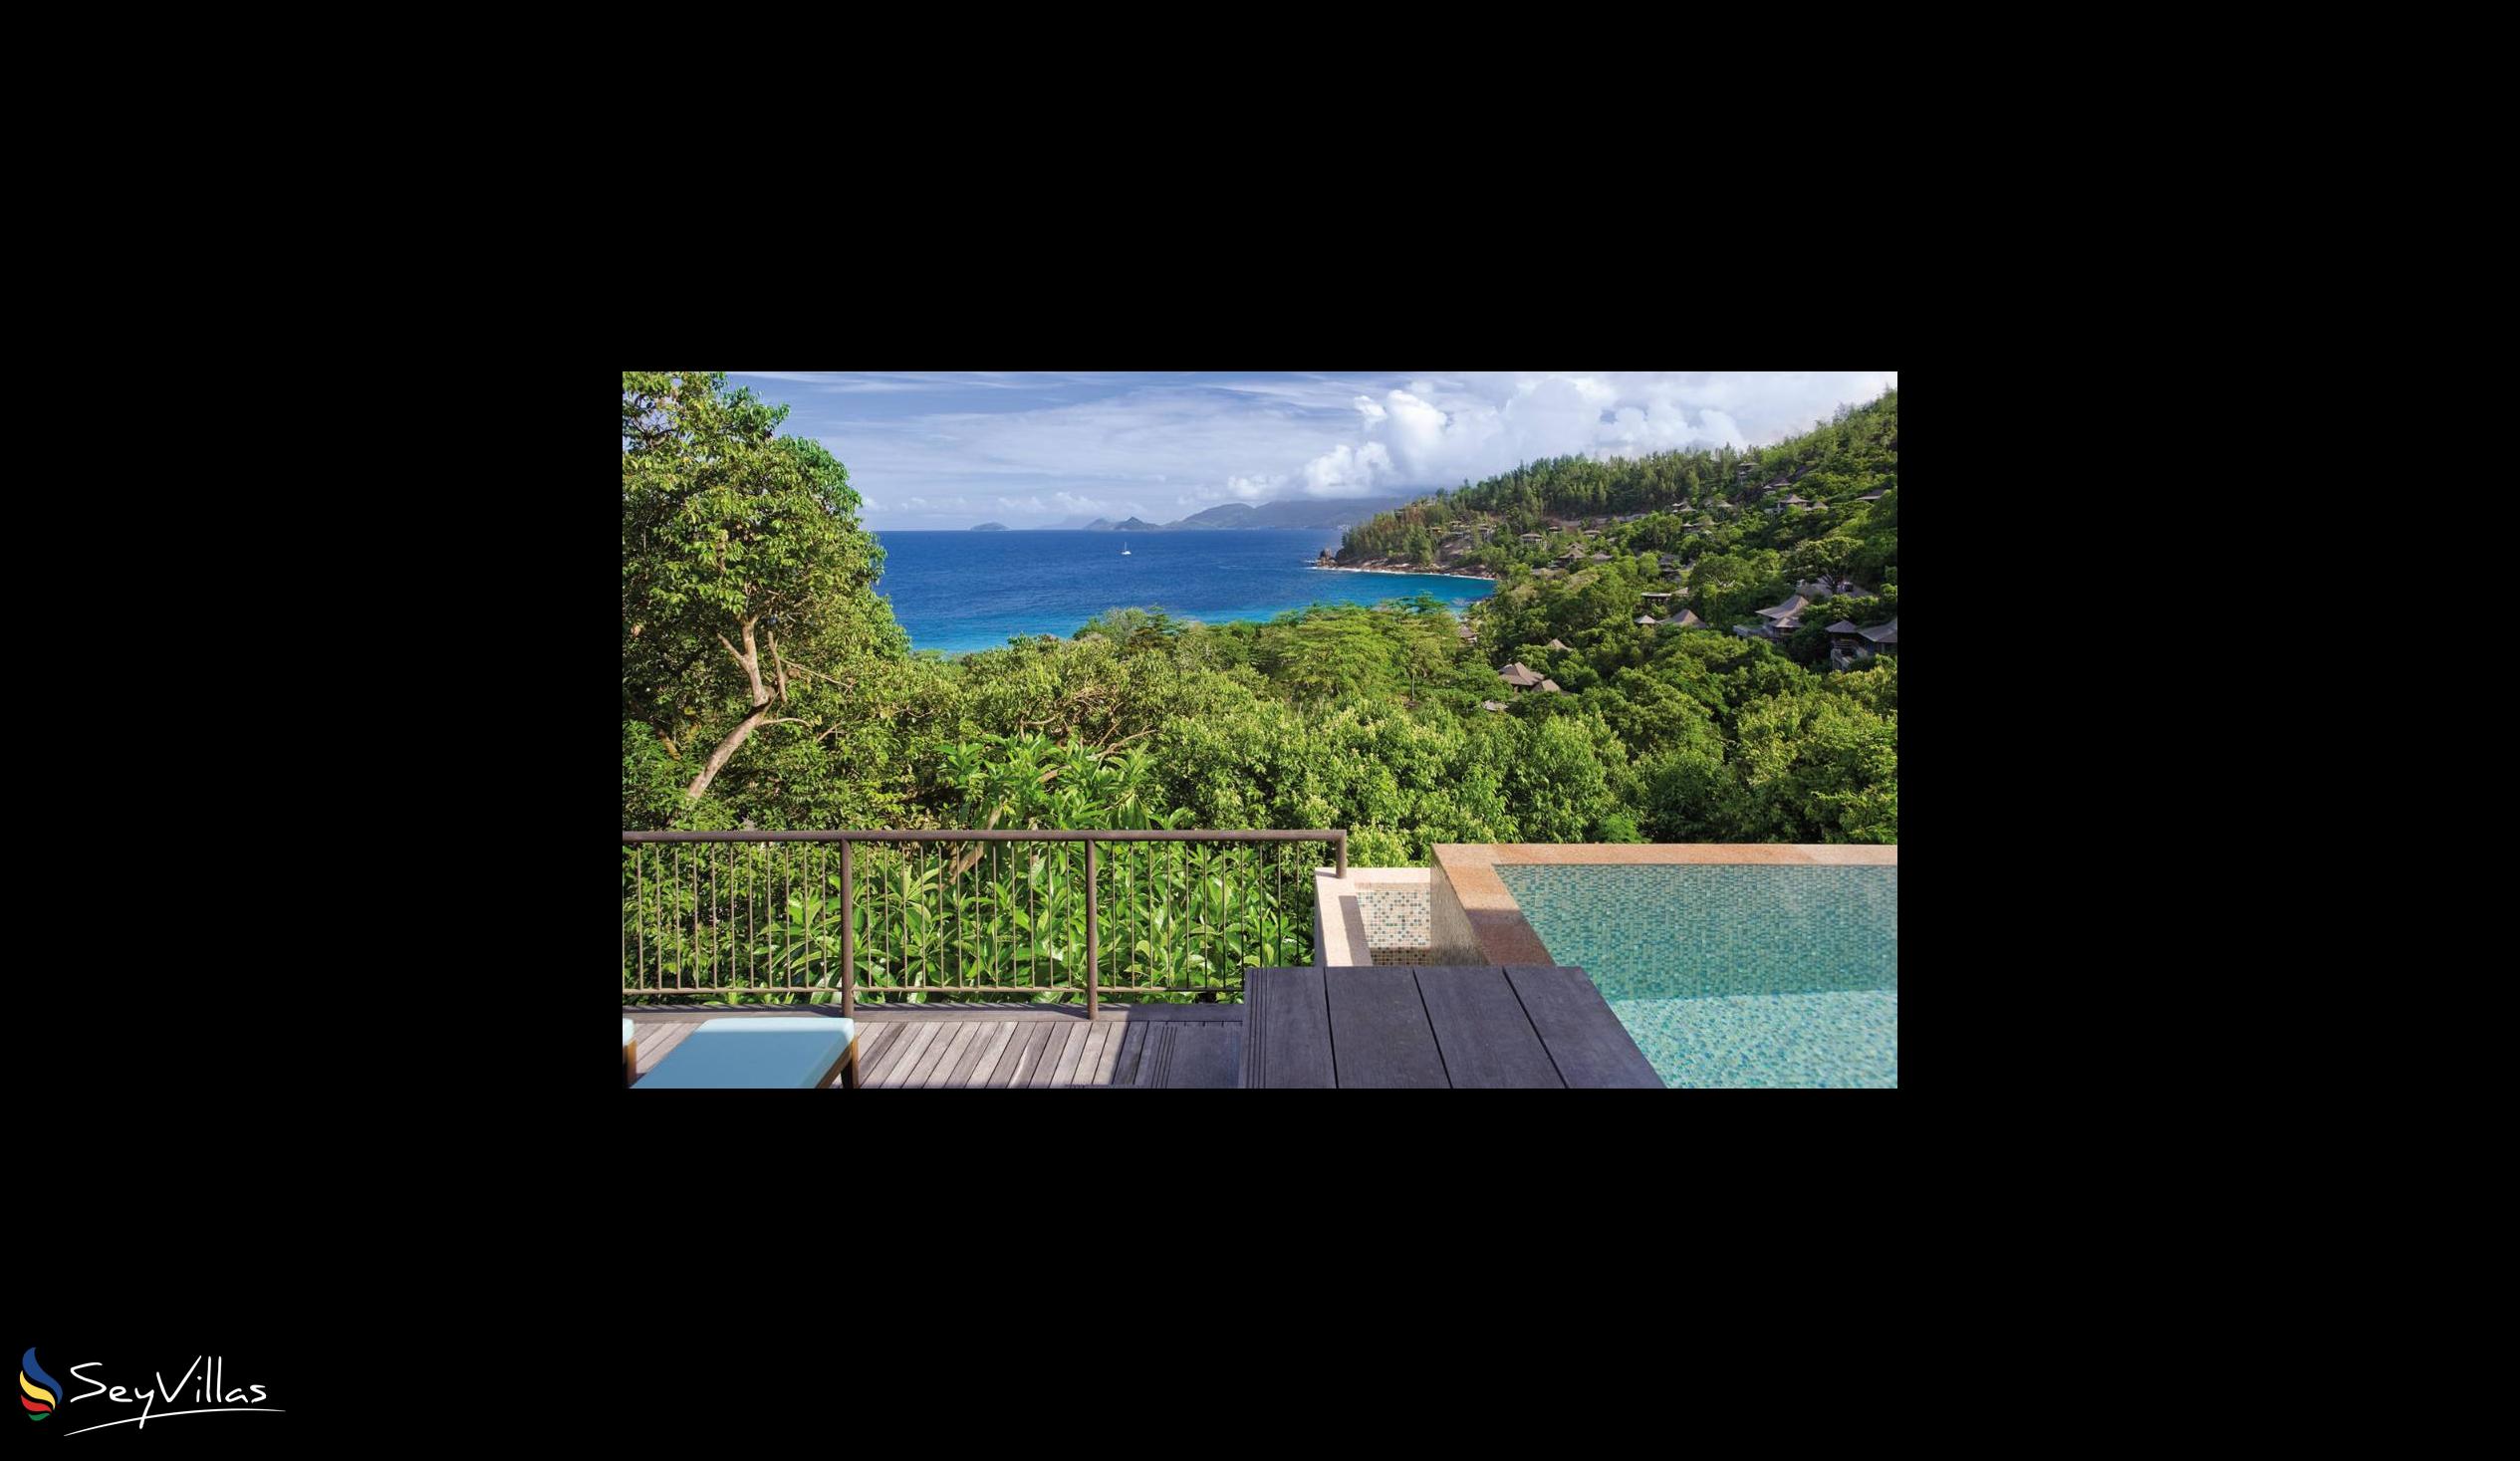 Foto 42: Four Seasons Resort - Hilltop Ocean View Villa - Mahé (Seychellen)